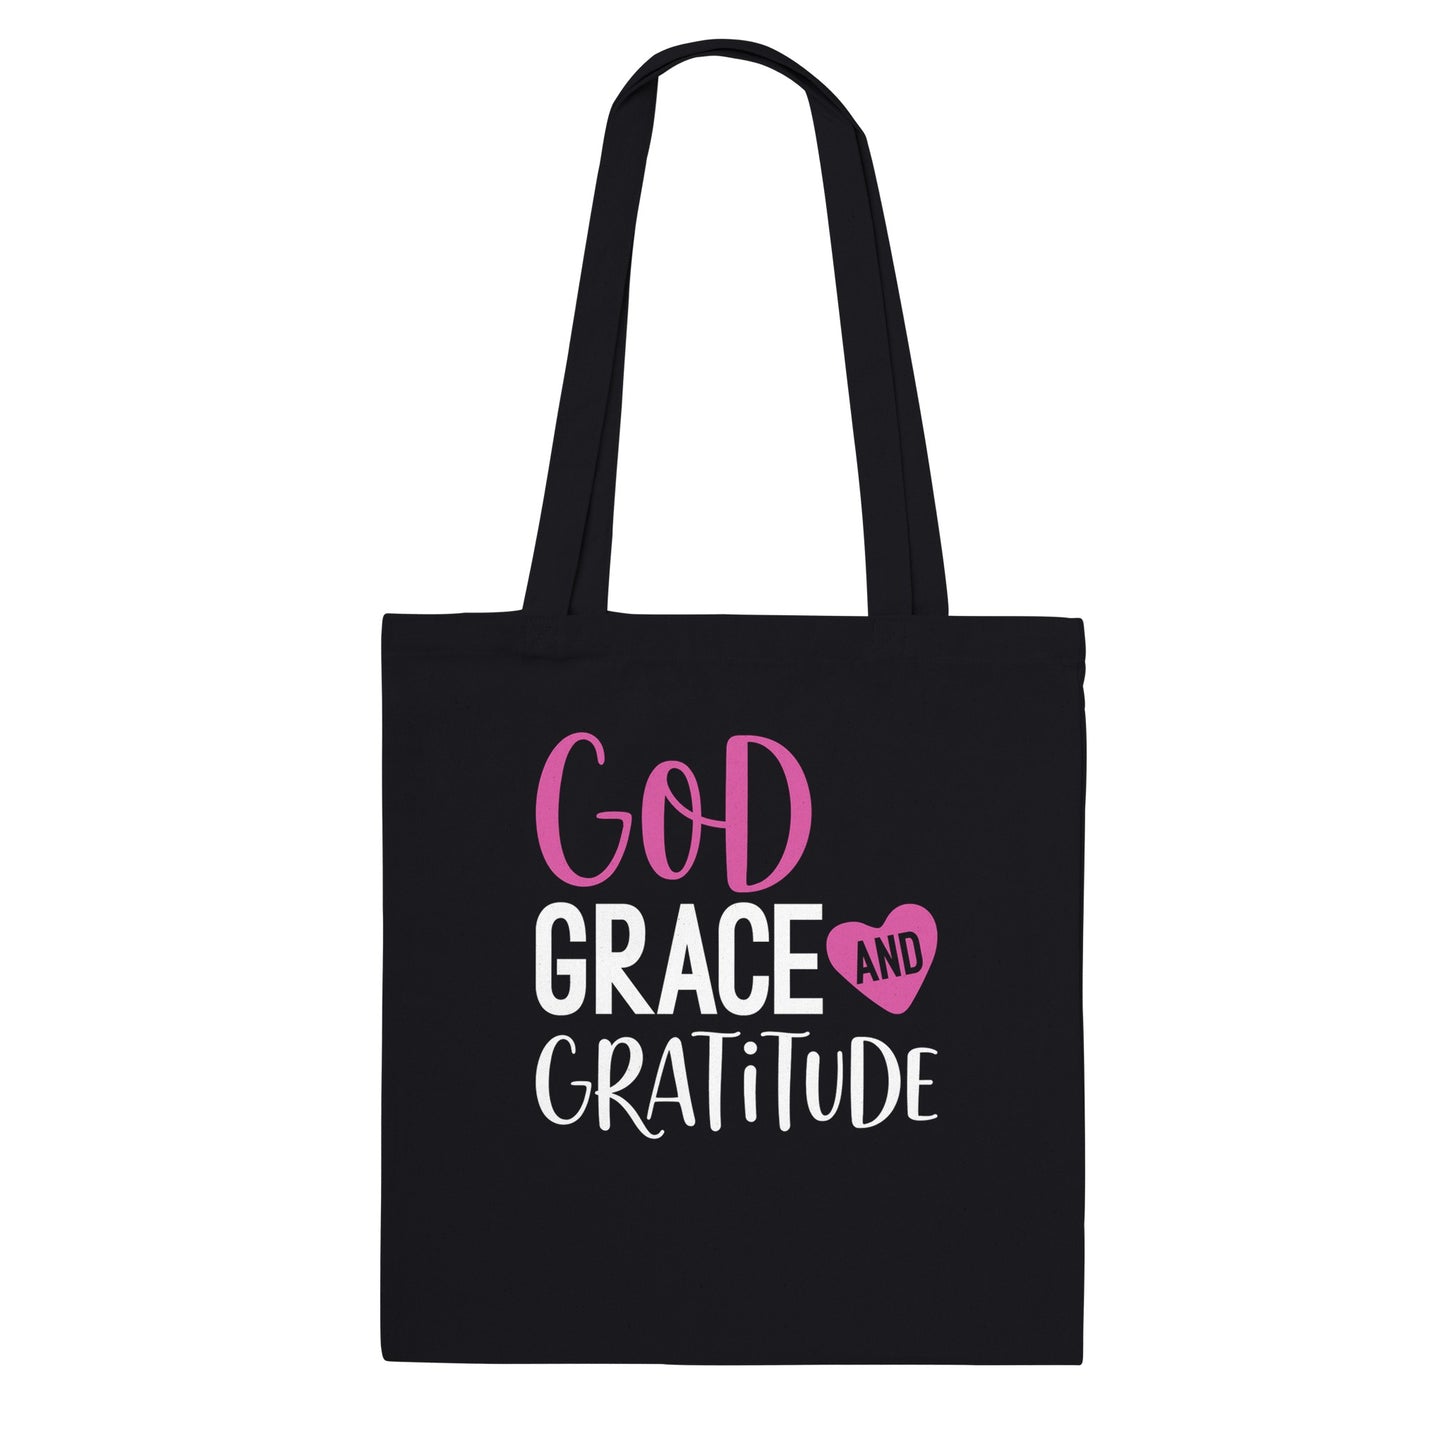 "God, Grace, and Gratitude" Christian Tote Bag